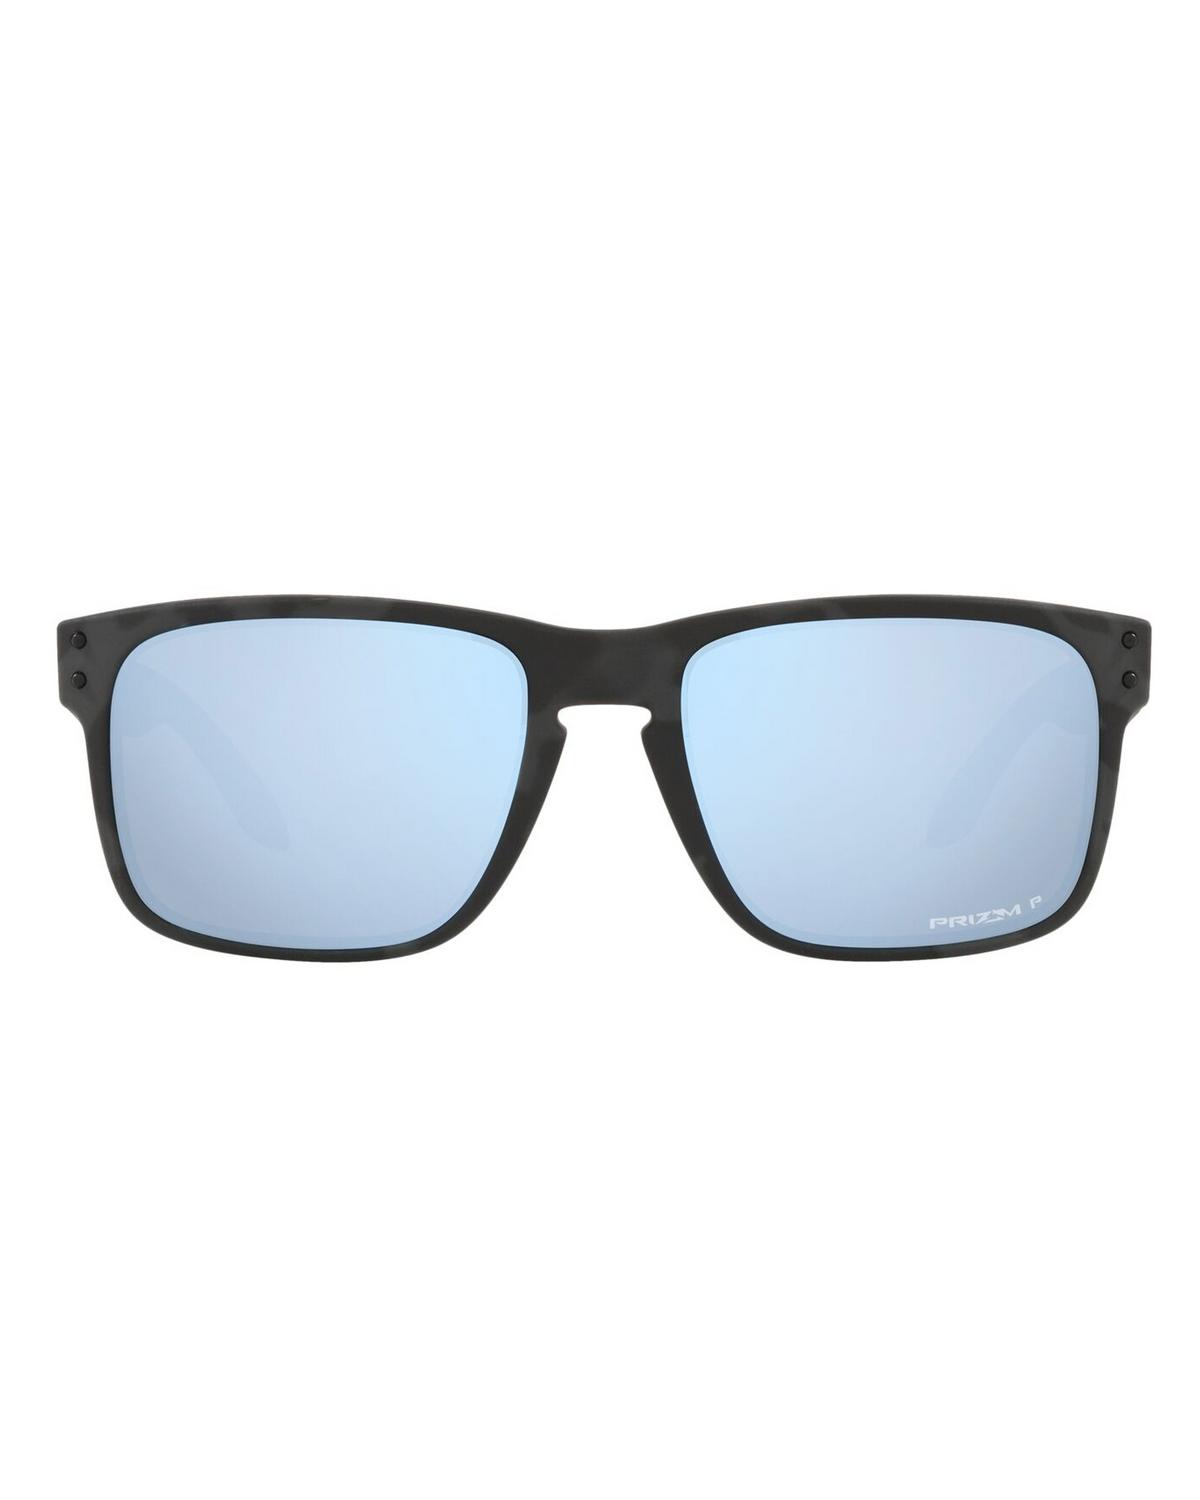 Oakley Holbrook Sunglasses -  Blue